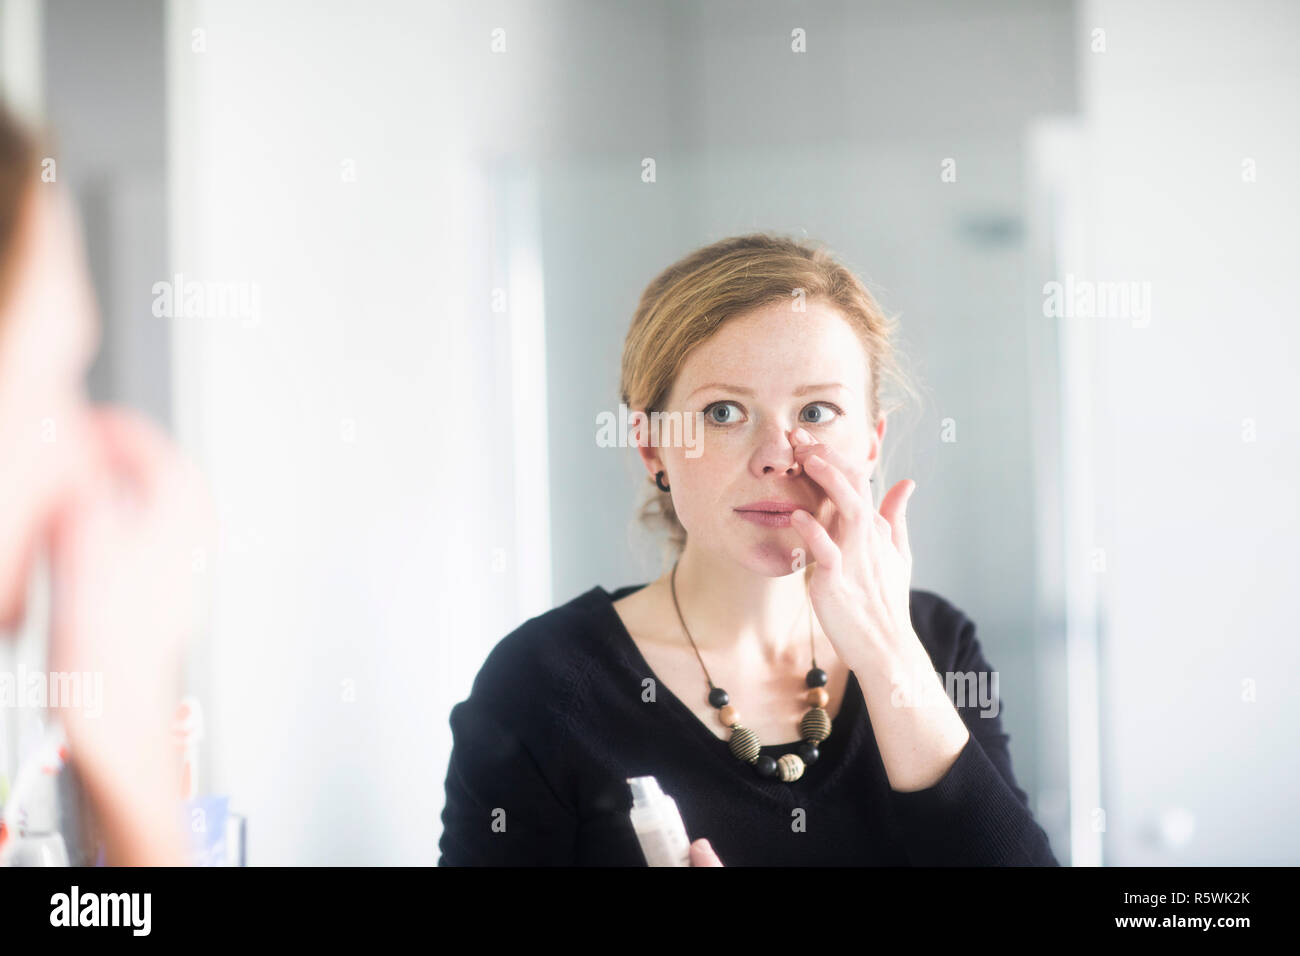 Woman standing in bathroom applying make-up Stock Photo